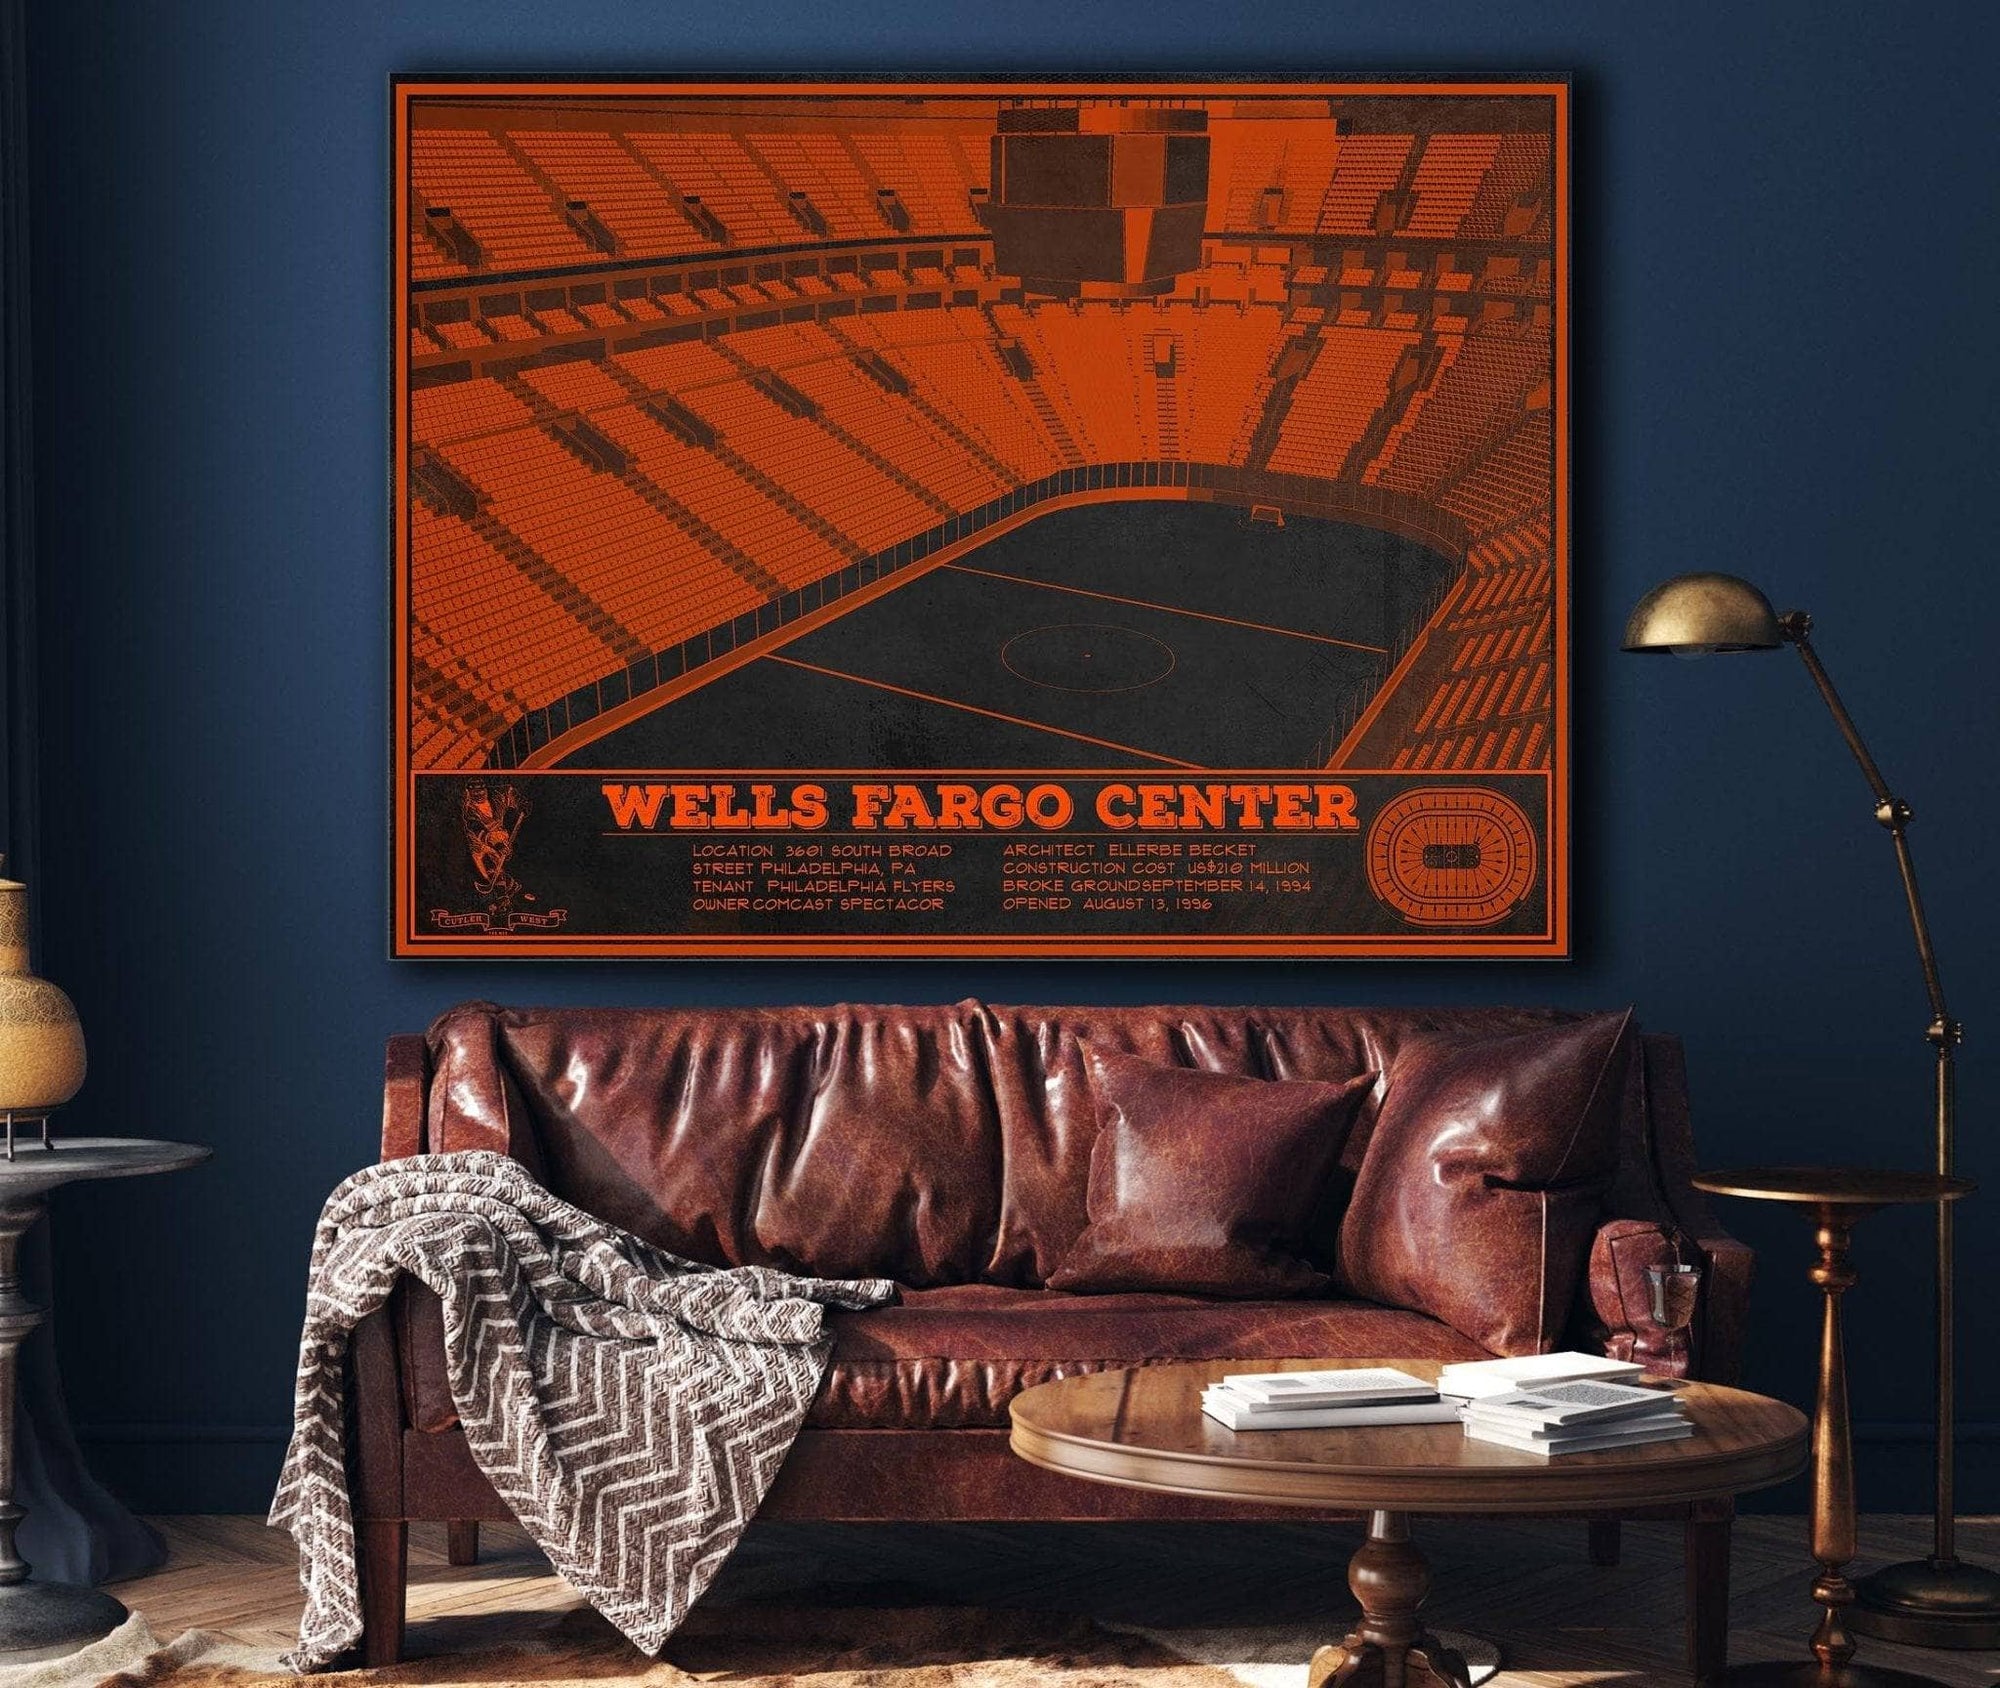 Philadelphia Flyers Wells Fargo Center Philadelphia Seating Chart - Vintage  Hockey Print